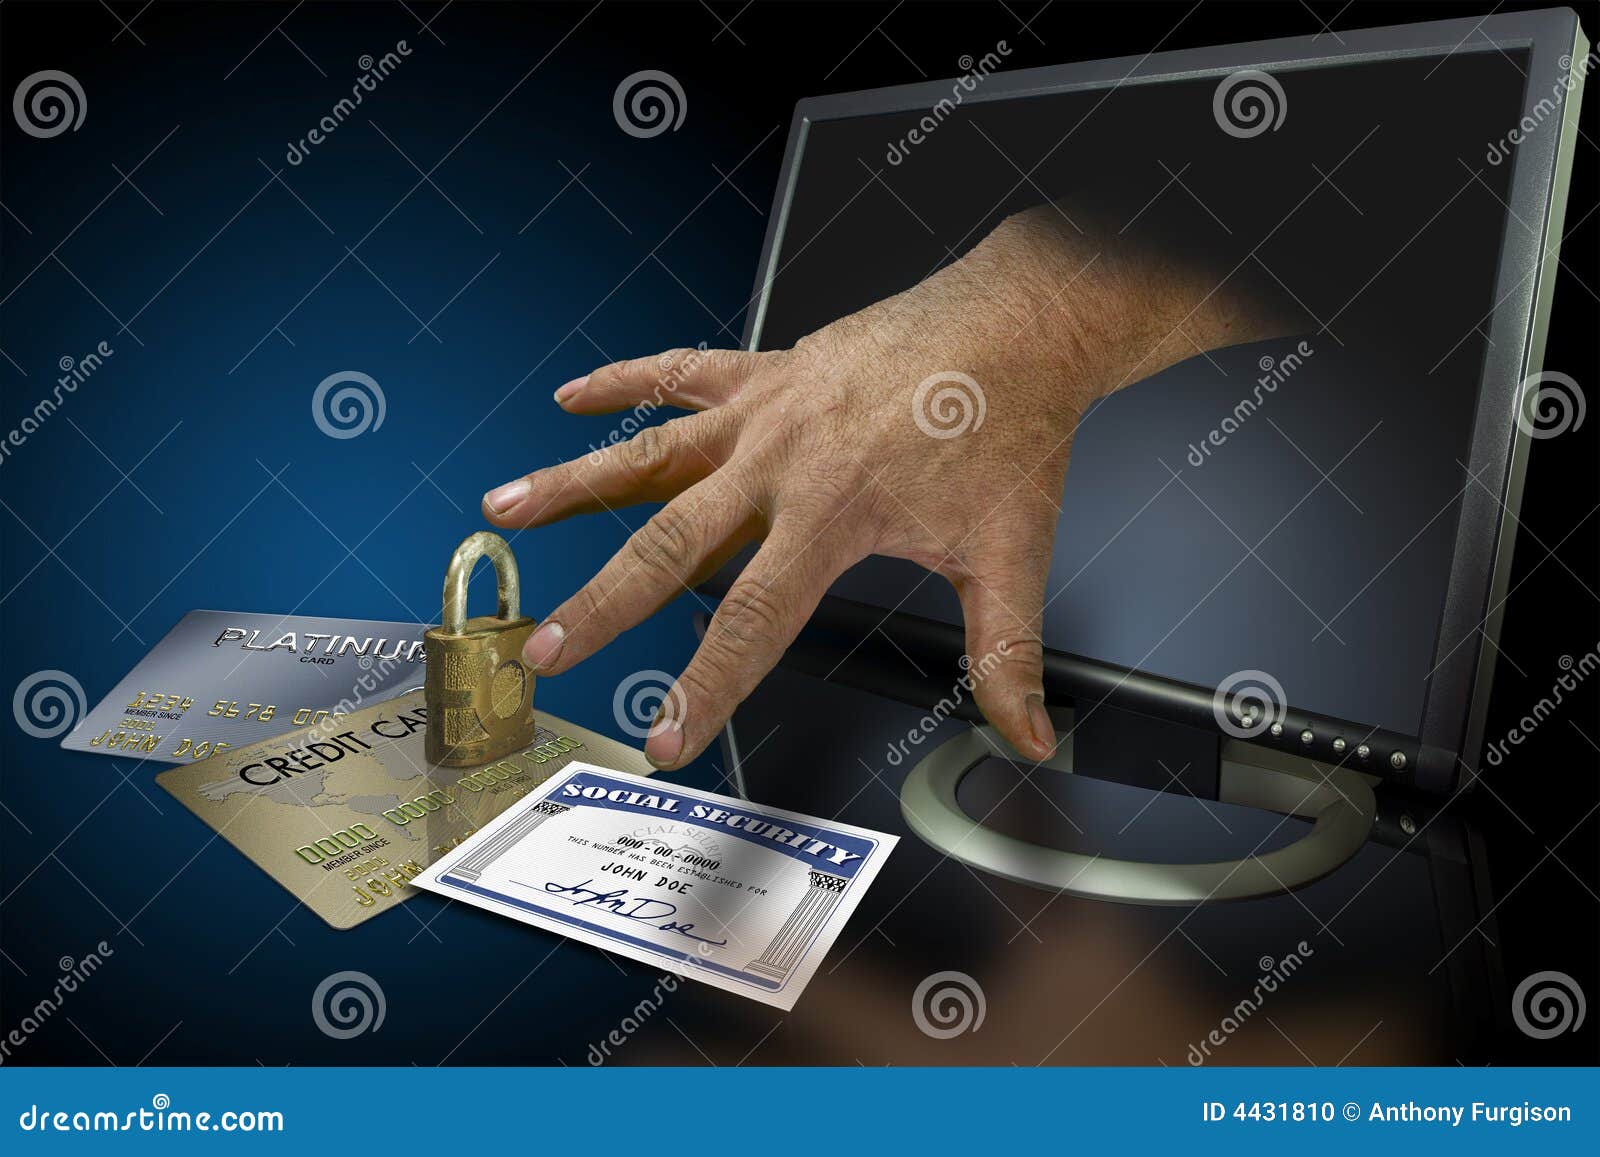 identity theft on the web